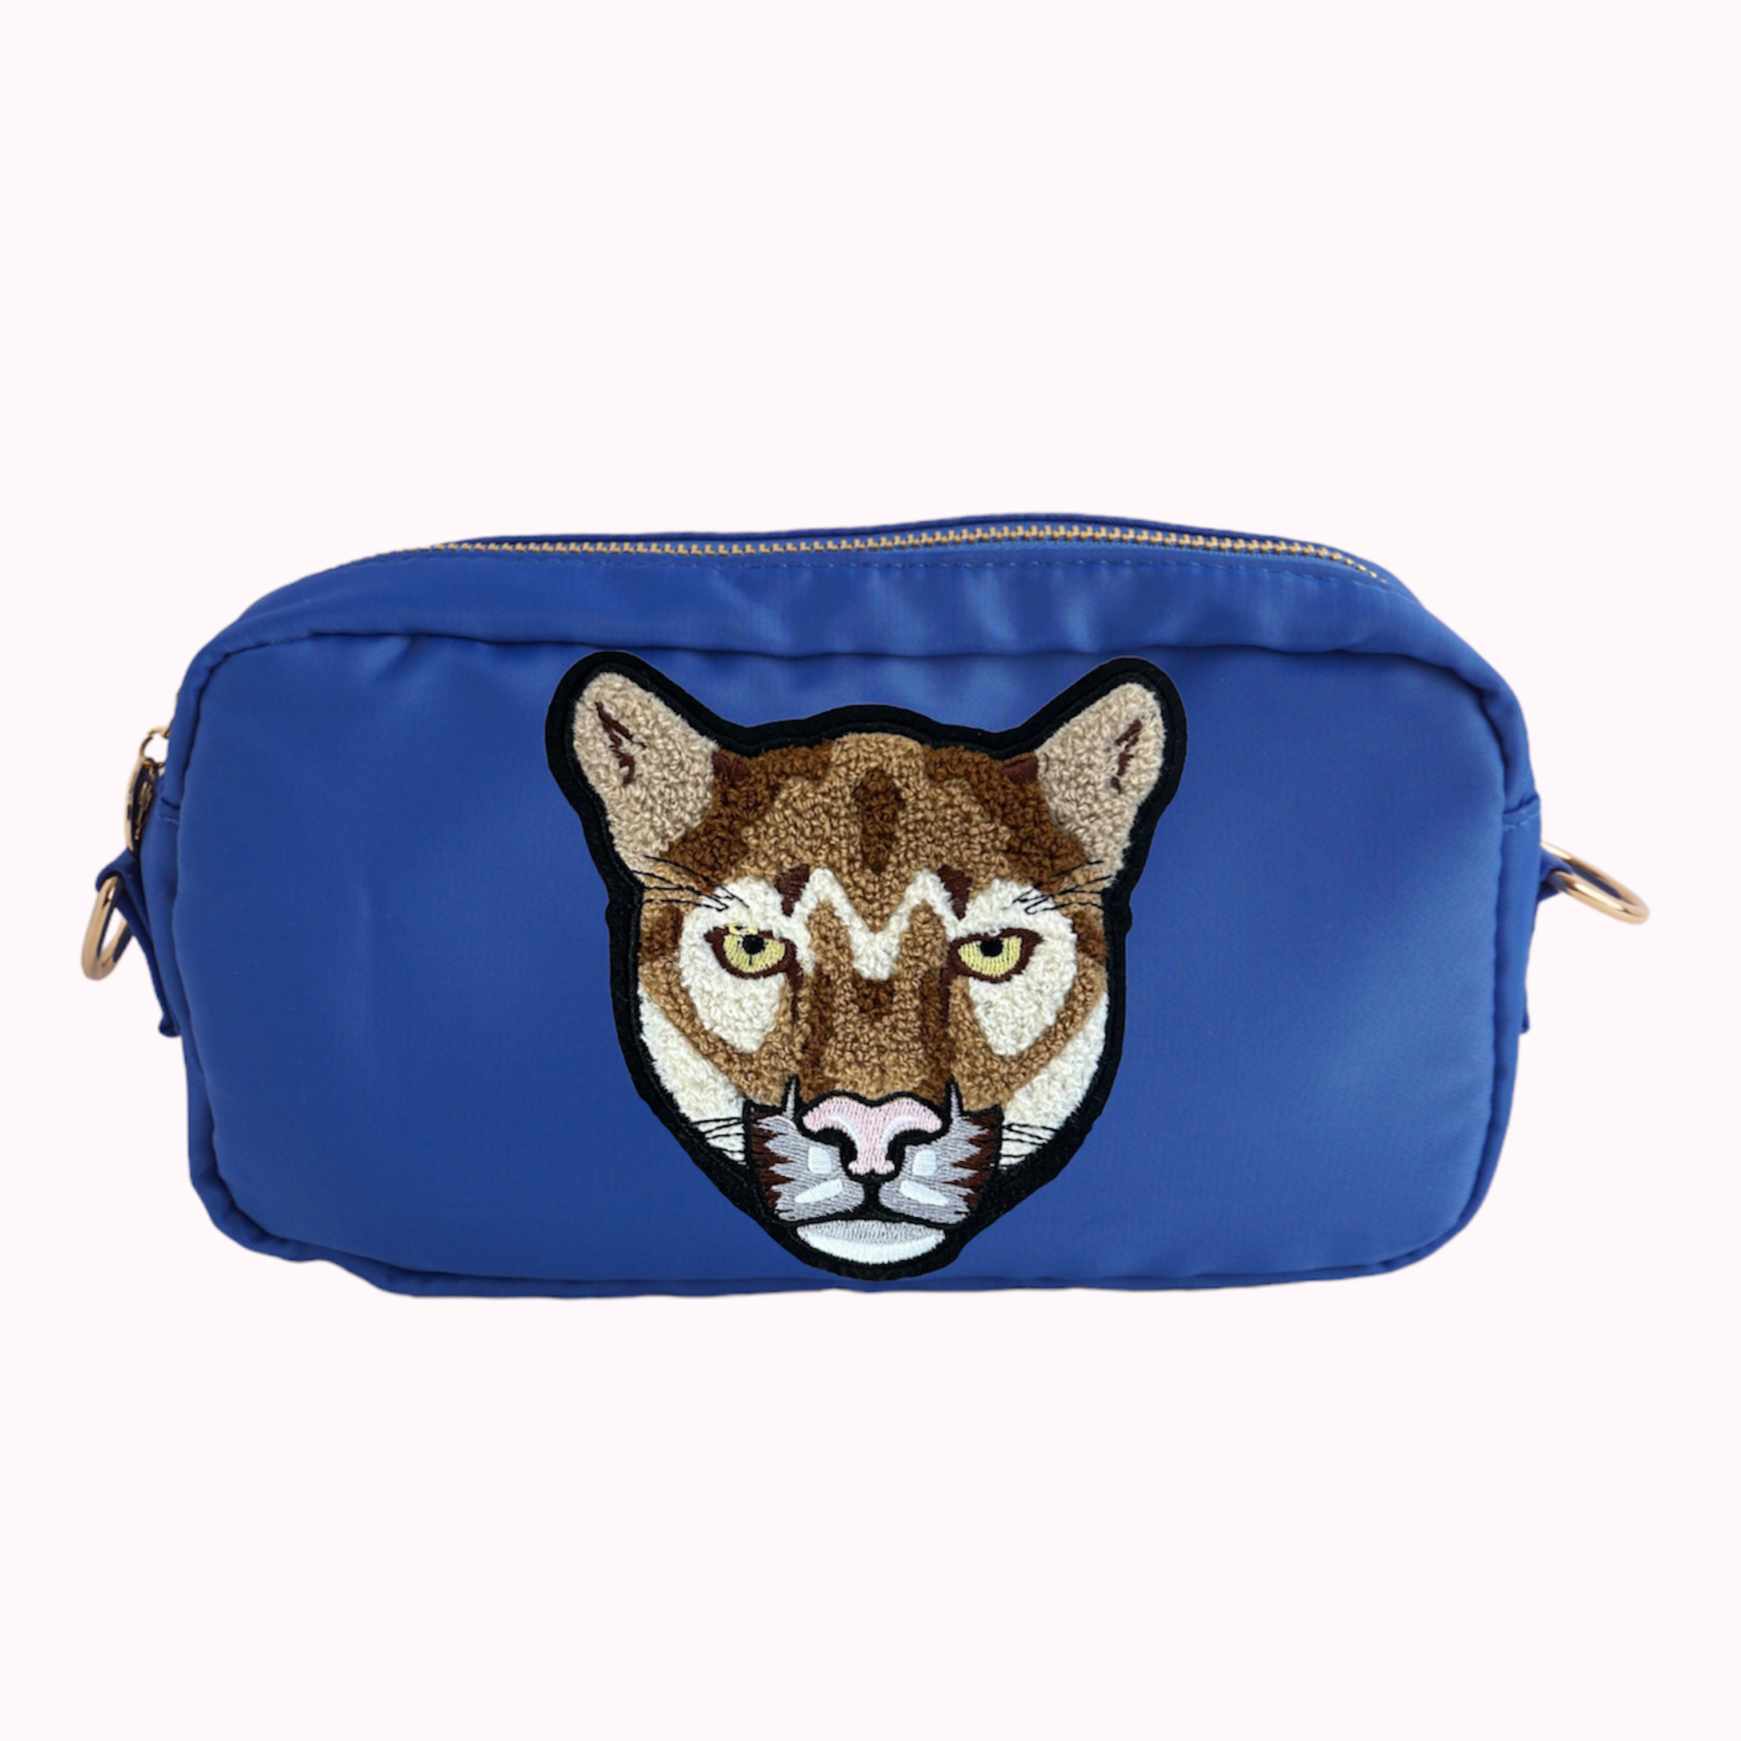 Royal blue medium crossbody bag with cougar patch. 